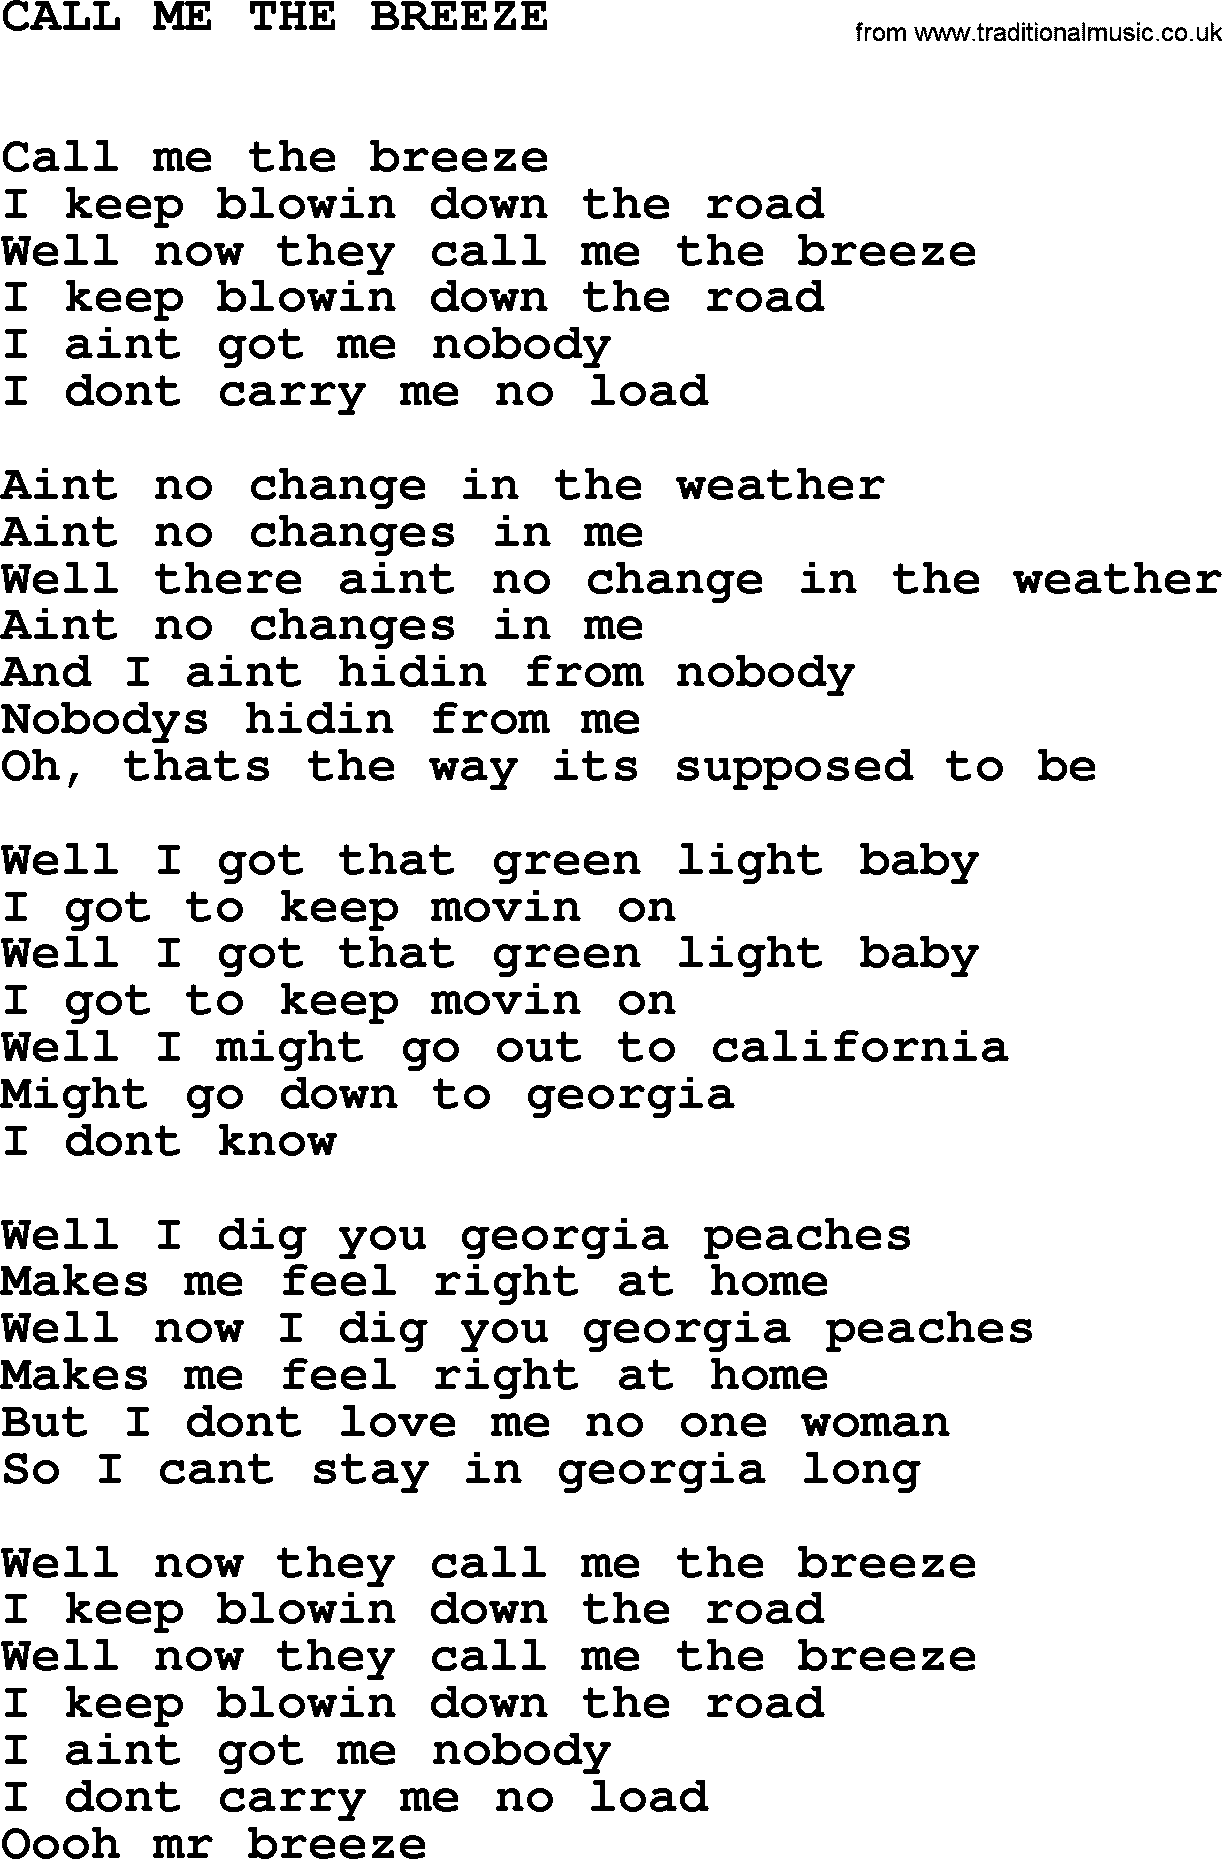 Johnny Cash song Call Me The Breeze.txt lyrics